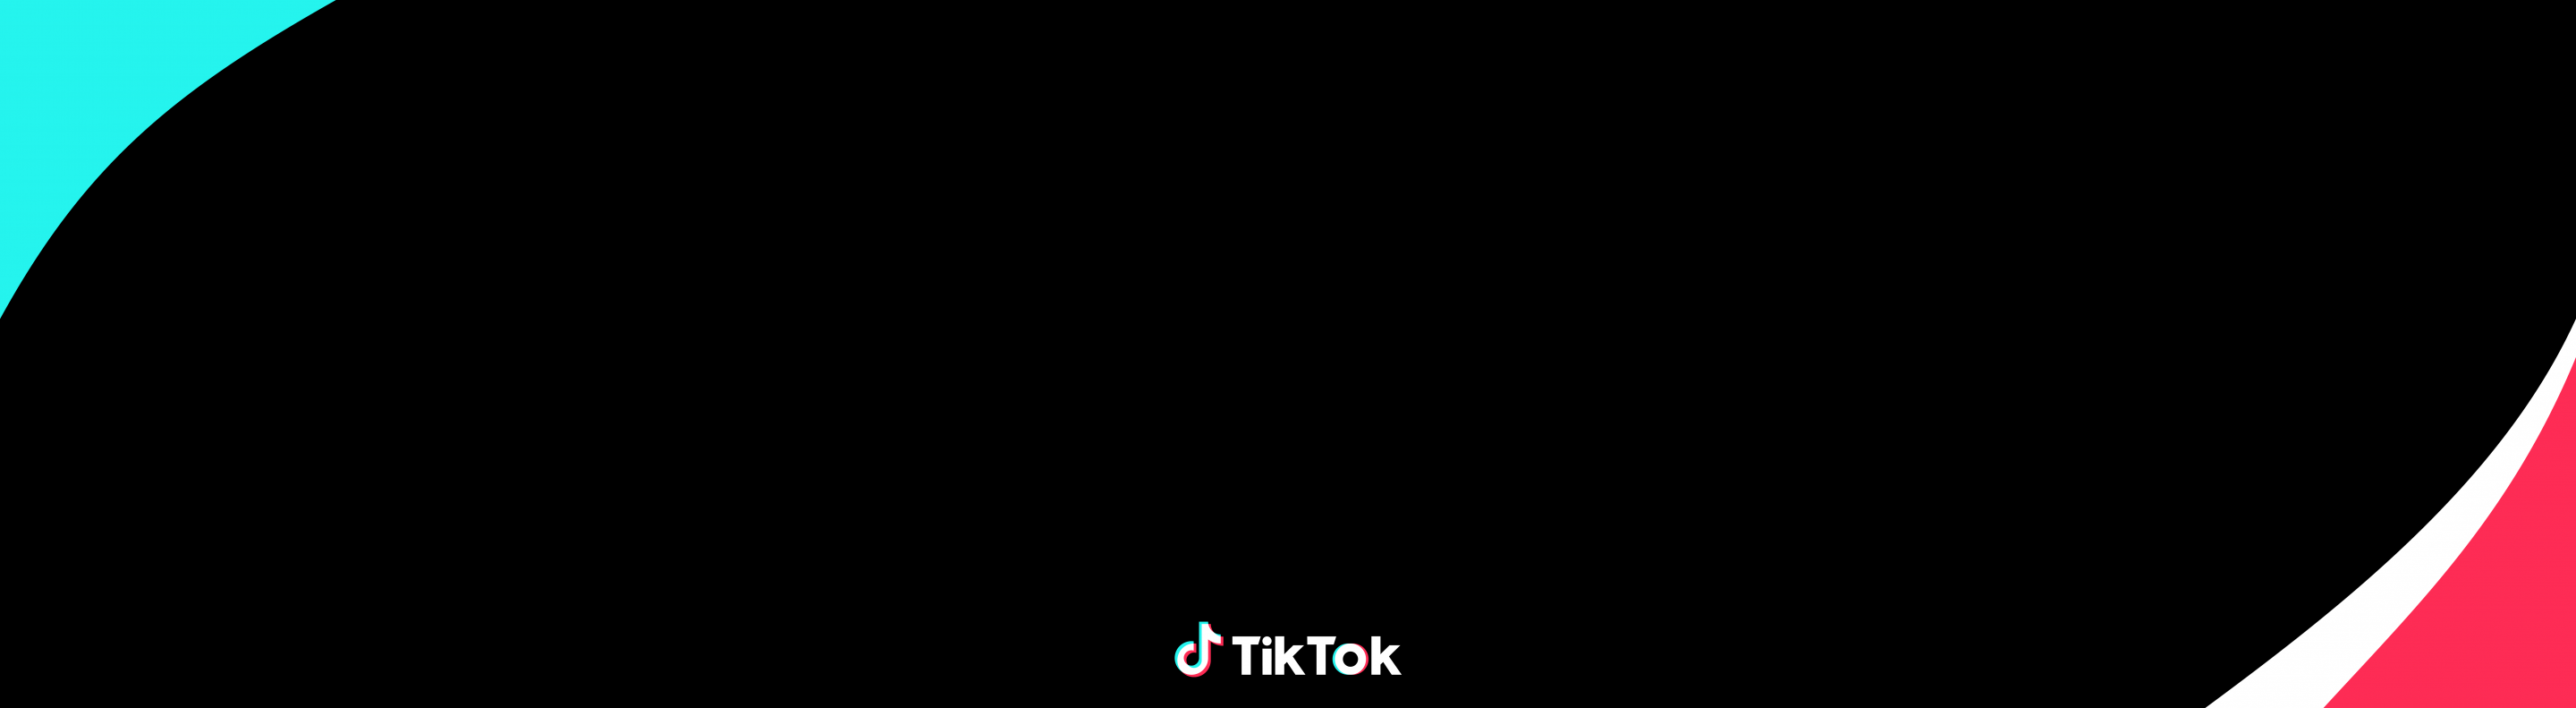 Who created the Renegade Dance on TikTok? The new TikTok challenge